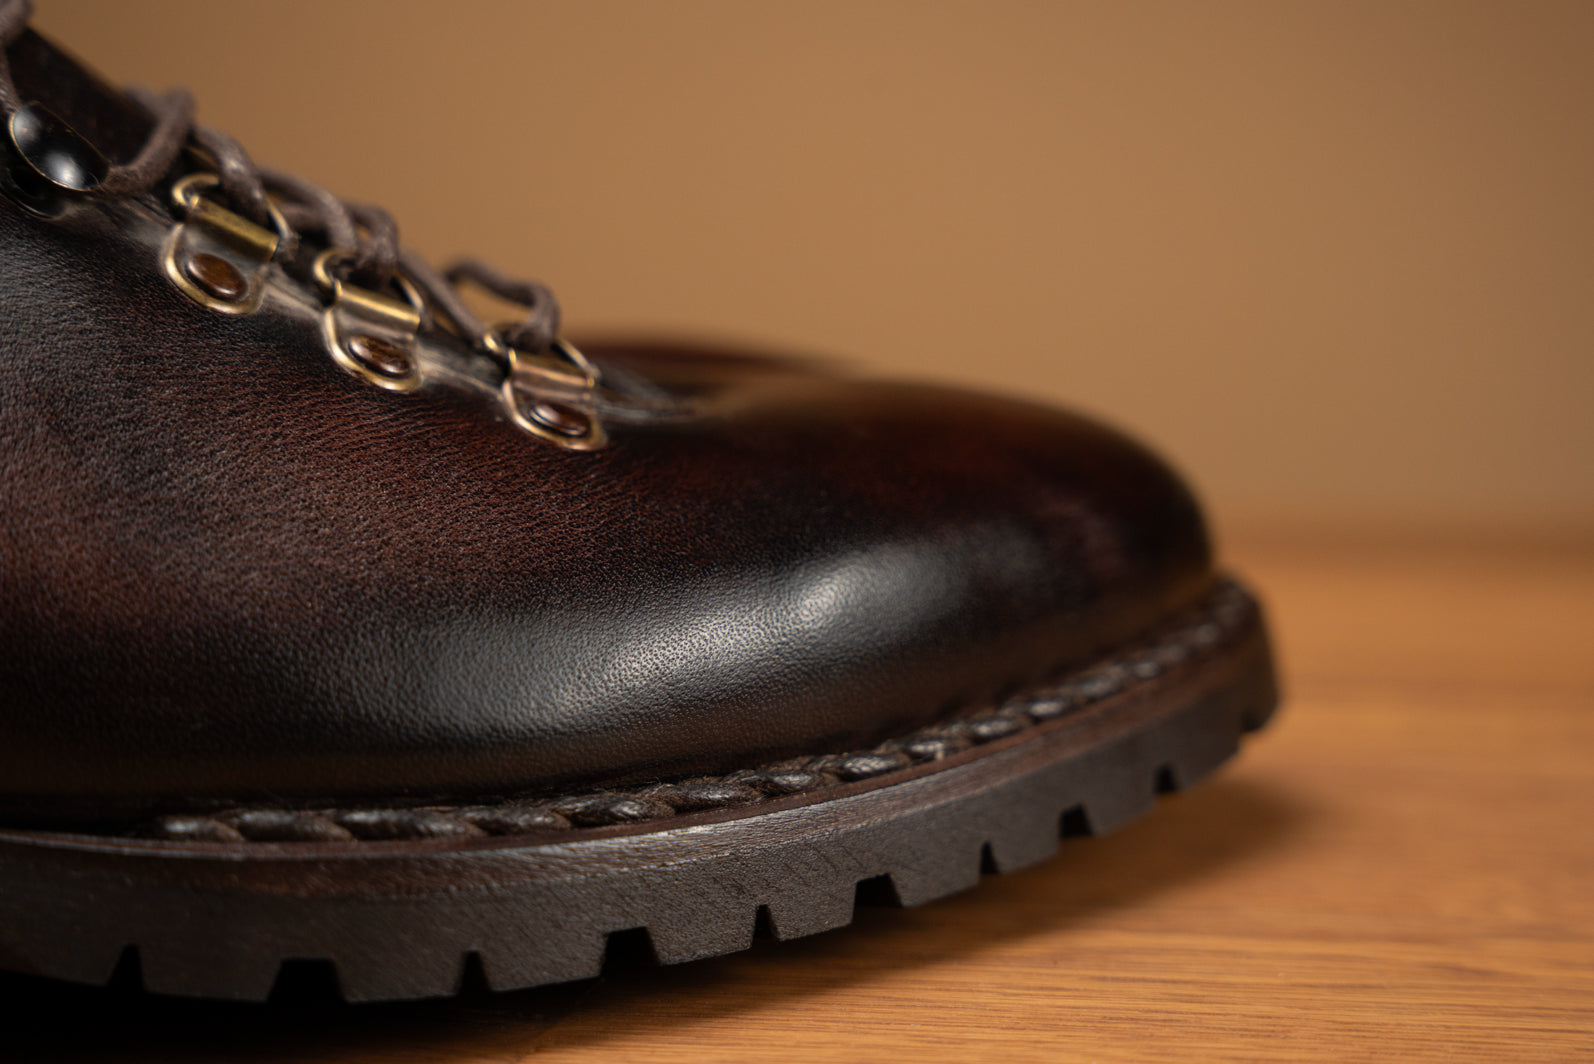 Bosphorus Leather Hiking Boots - Kailash Dark Brown